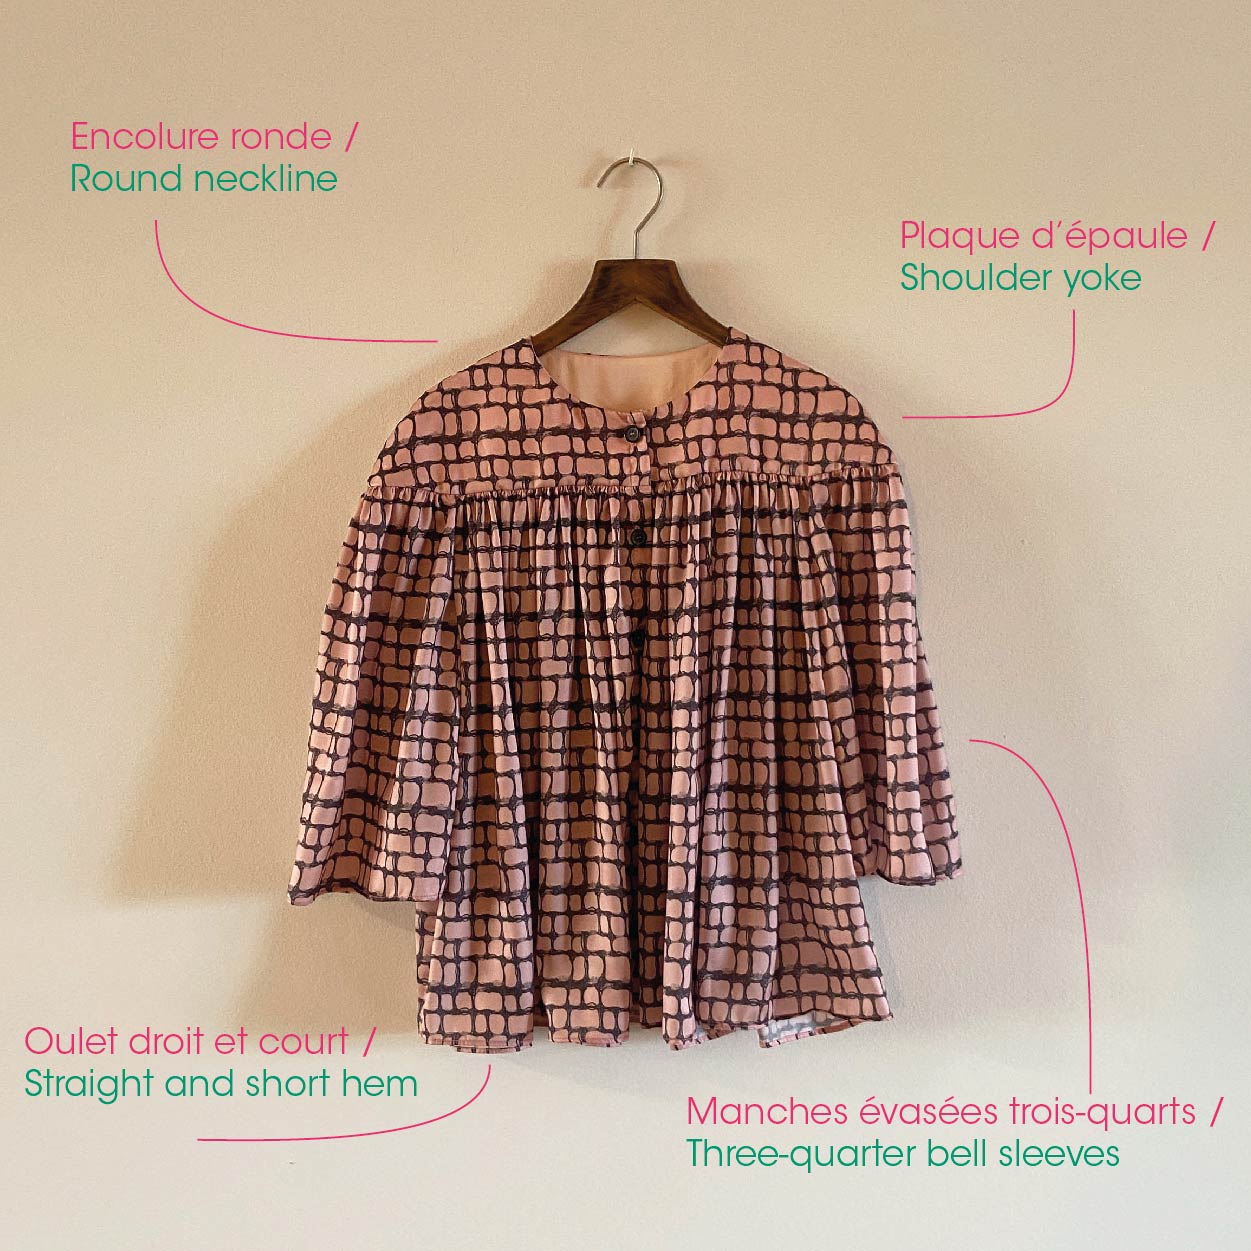 Opian_sewing_pattern_Civetta_blouse